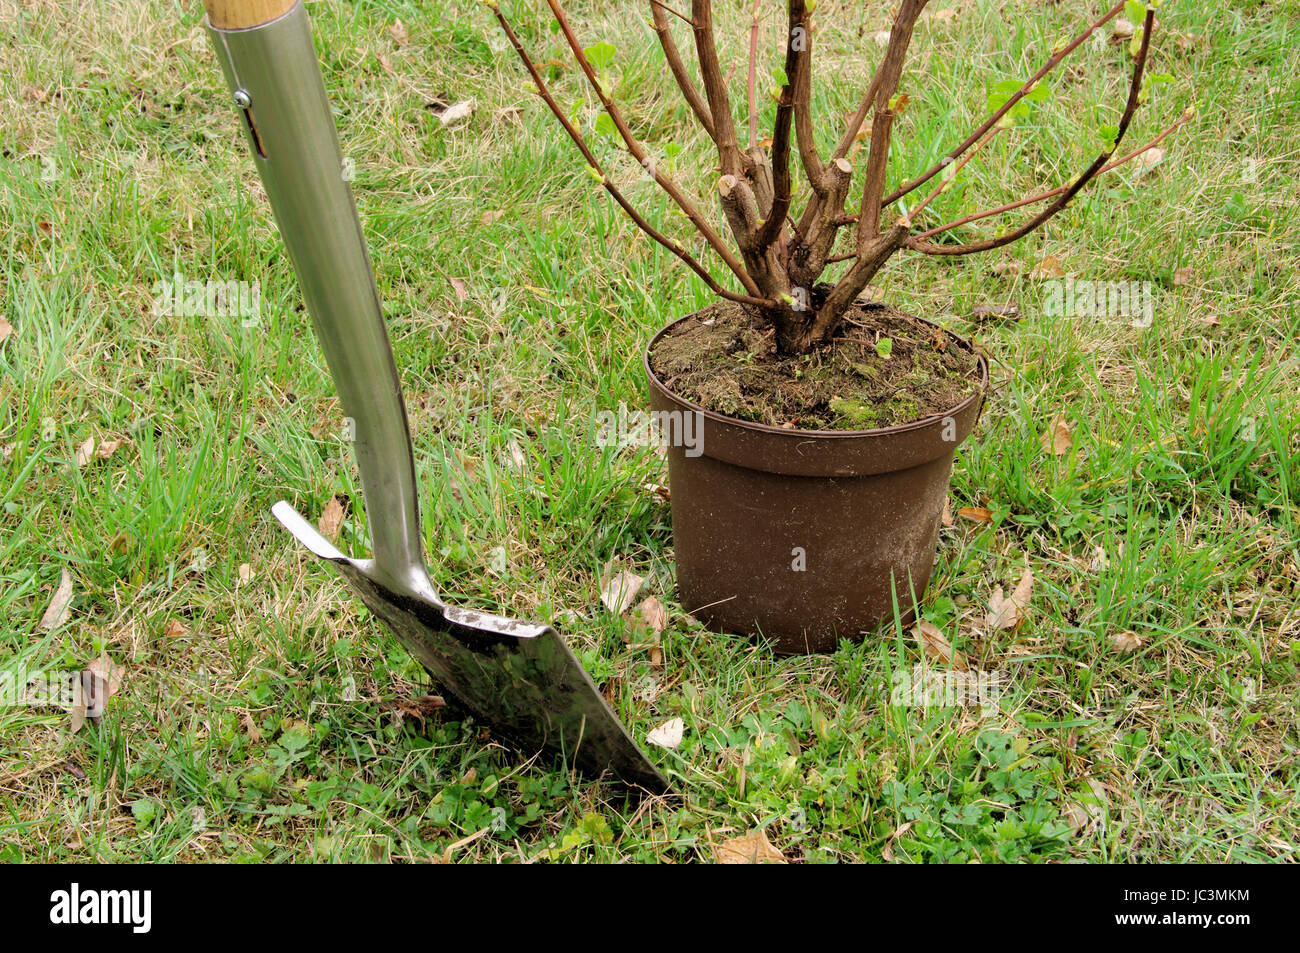 Strauch einpflanzen - planting a shrub 01 Stock Photo